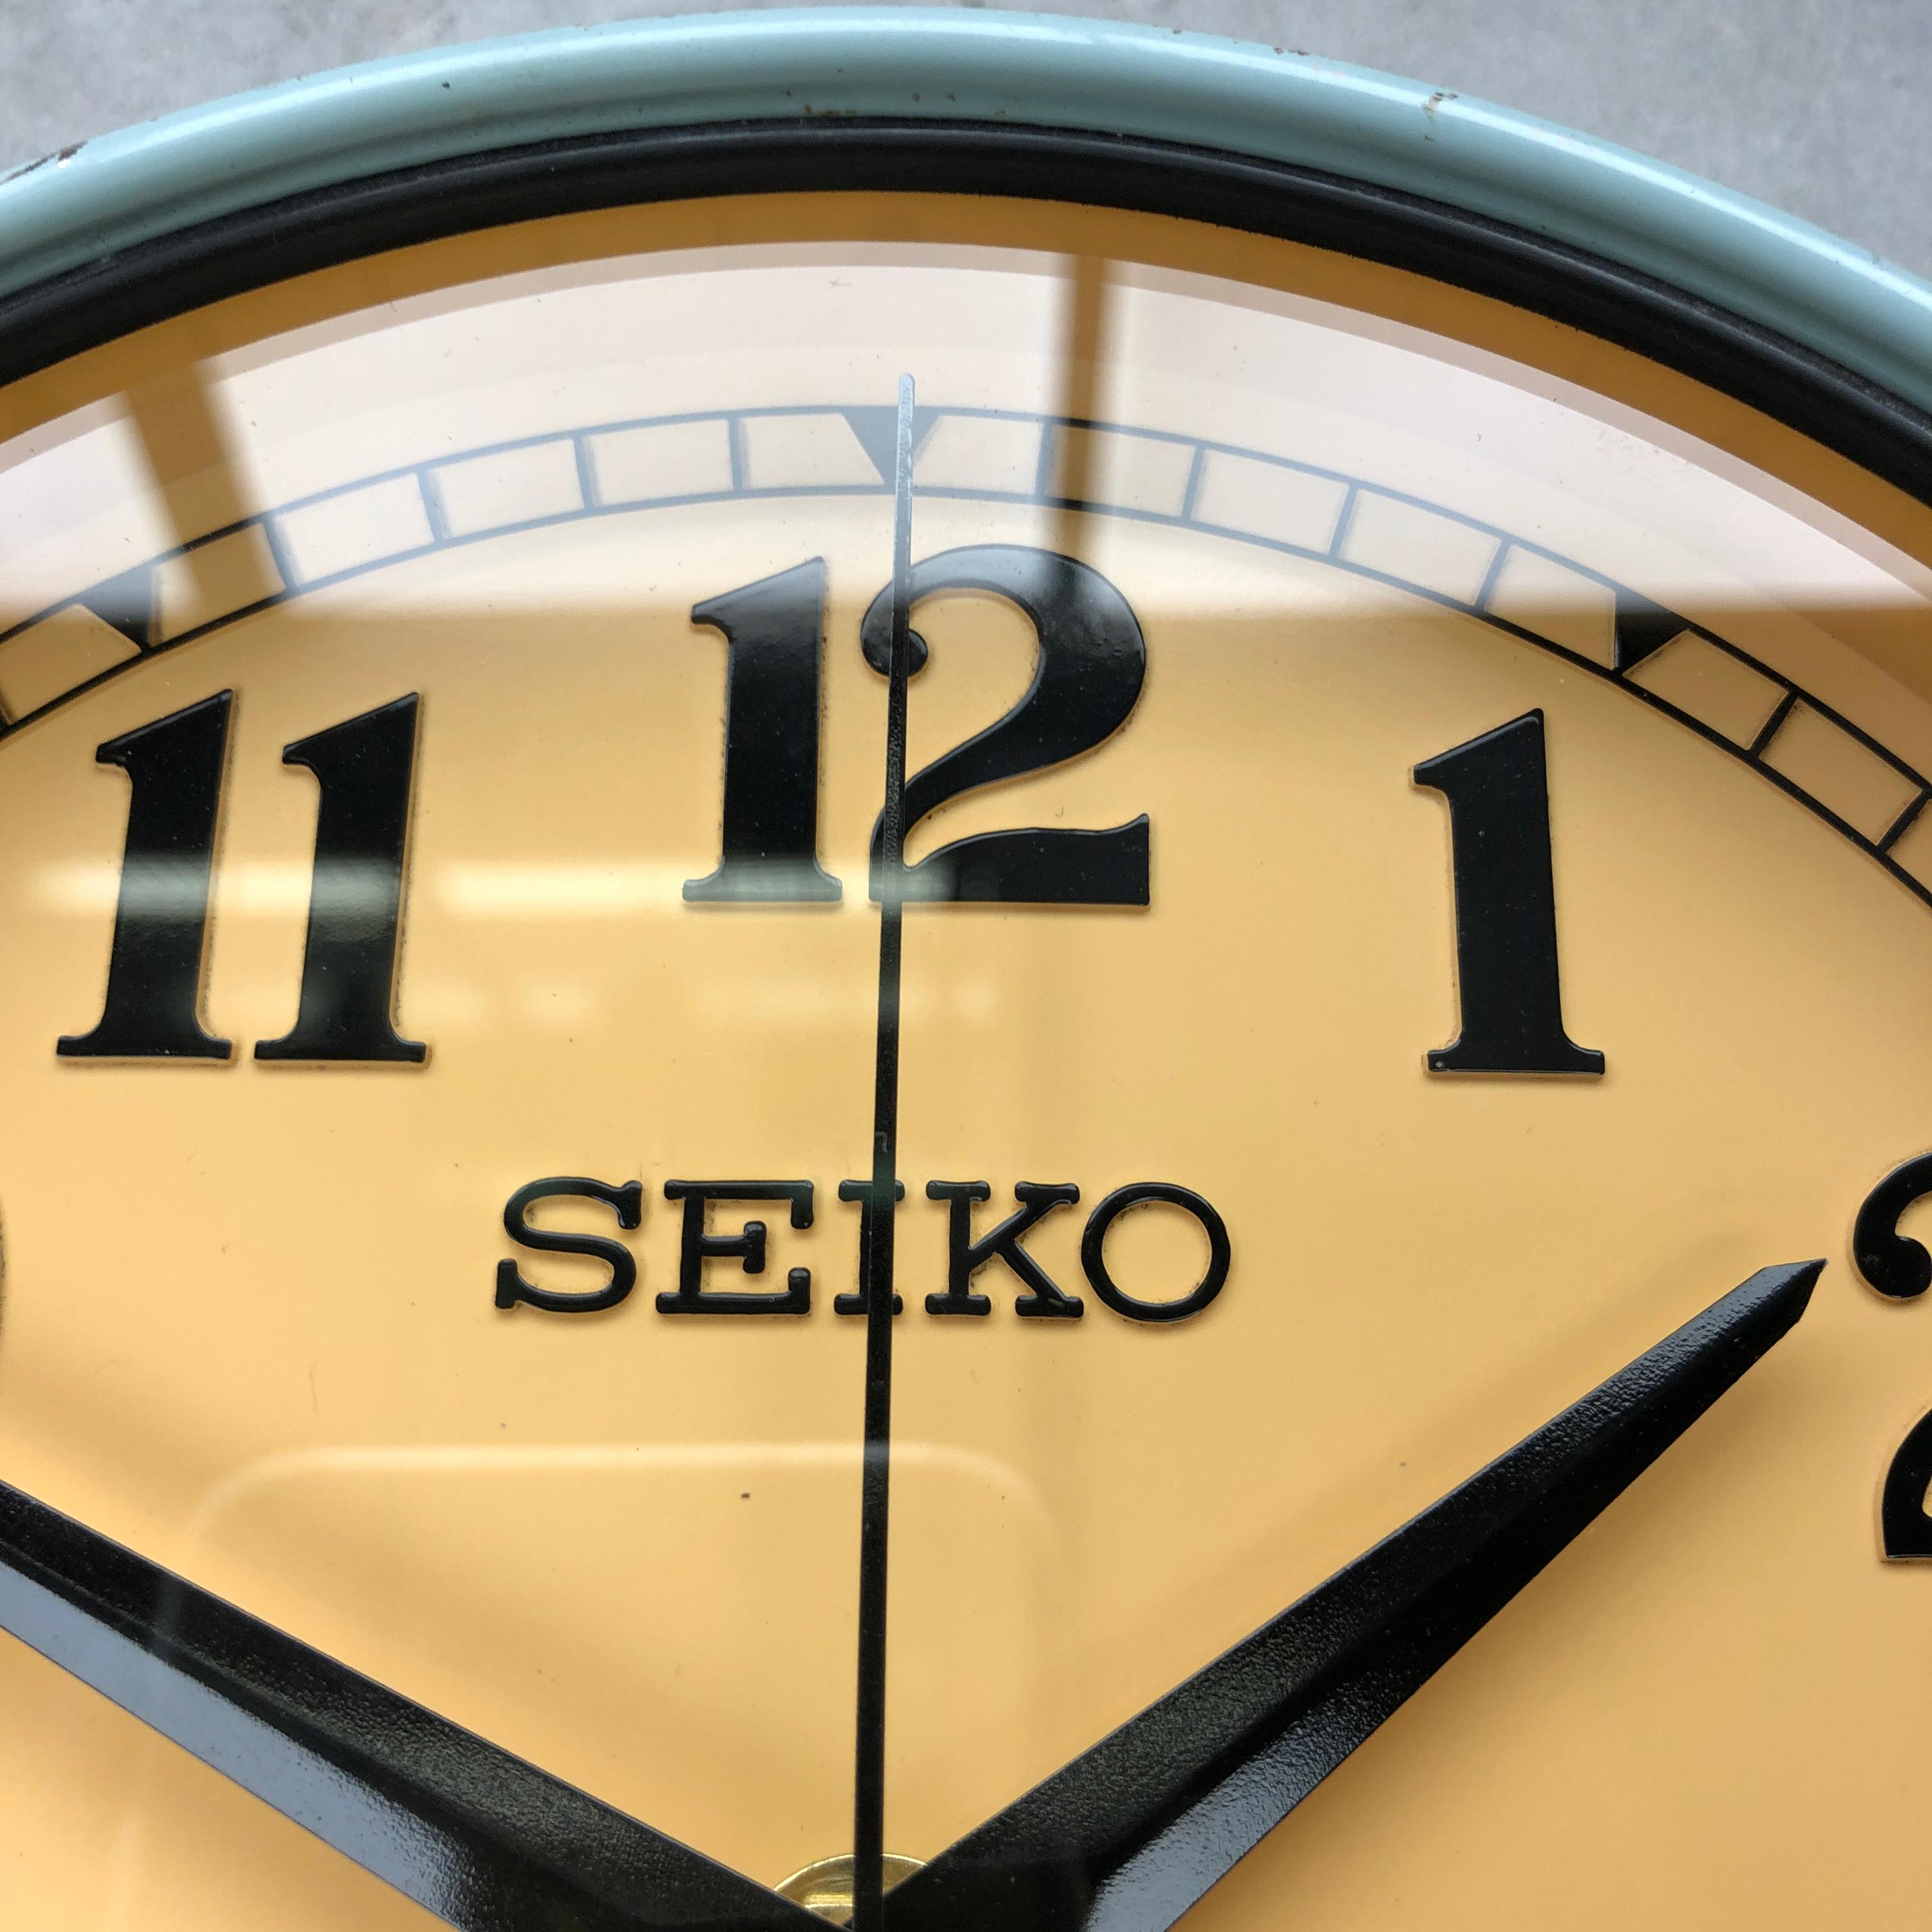 1970 Seiko Blue and Tobacco Retro Vintage Industrial Antique Steel Quartz Clock For Sale 3